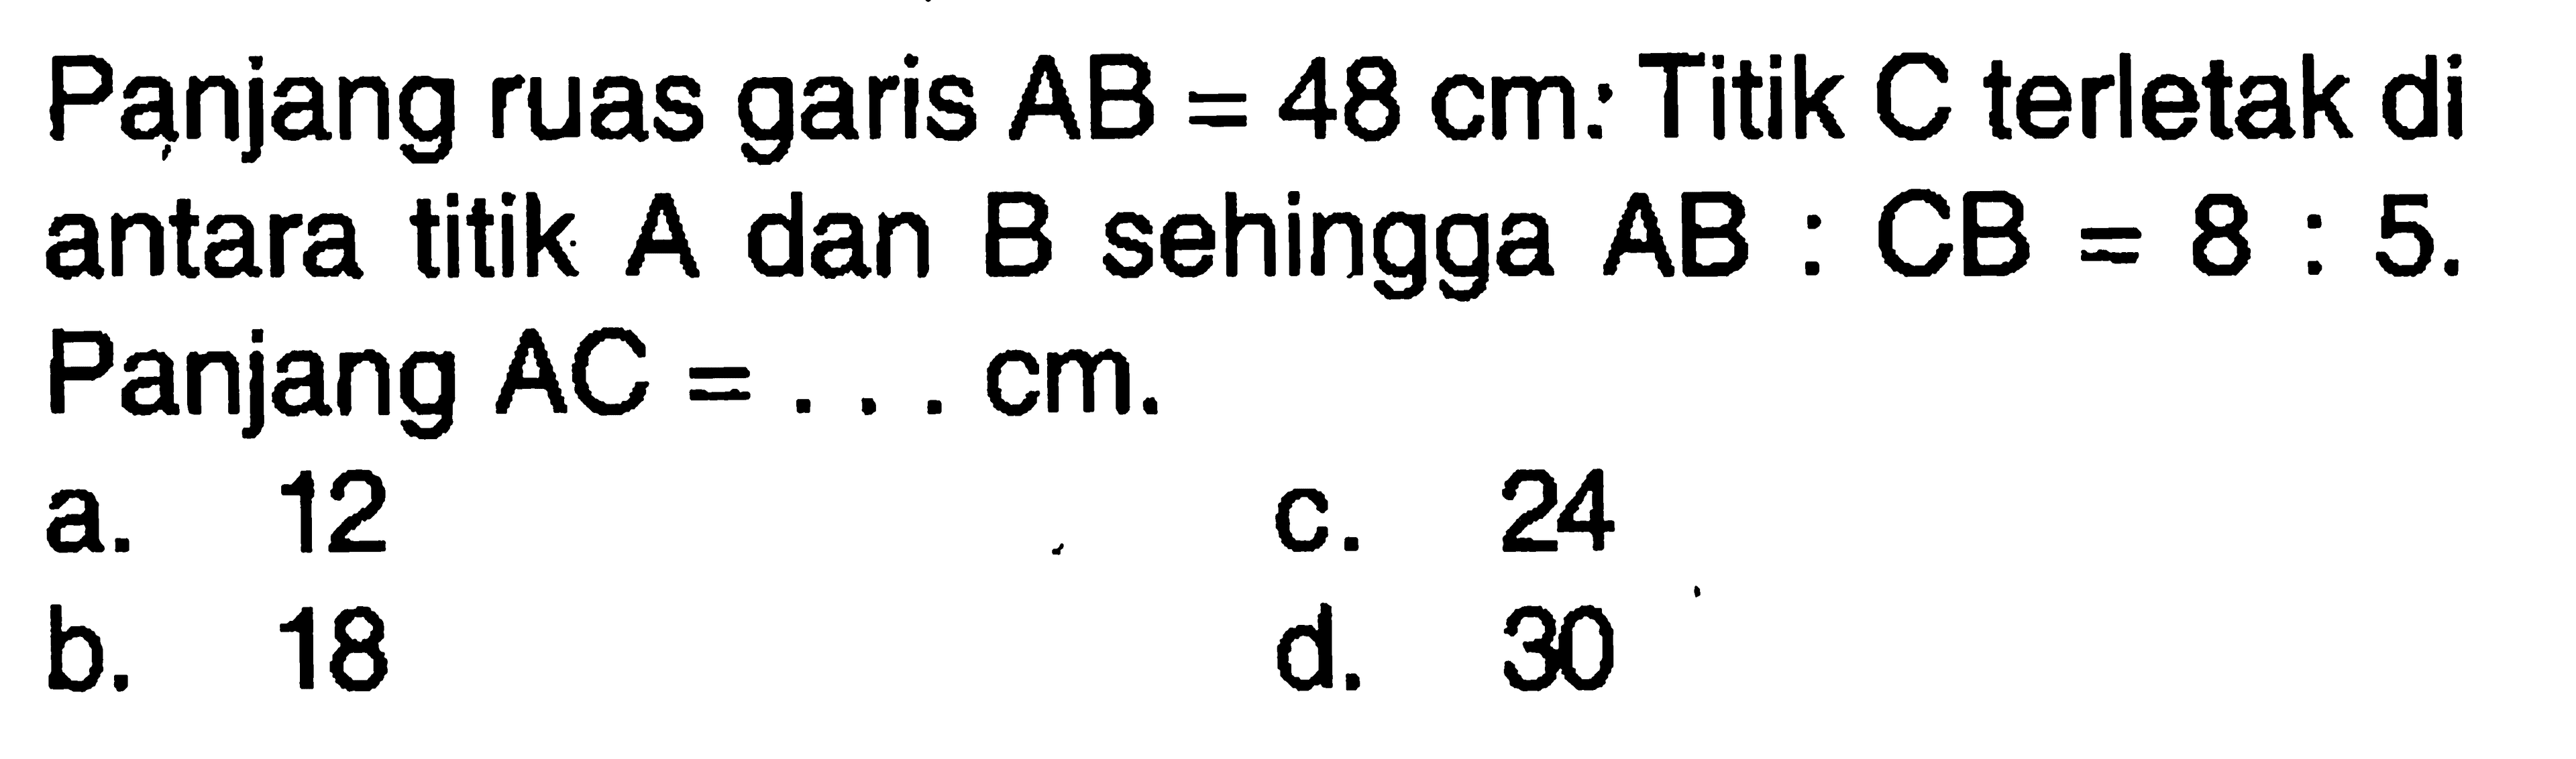 Panjang ruas garis AB=48 cm: Titik C terletak di antara titik A dan B sehingga AB:CB=8:5. Panjang AC=...cm.